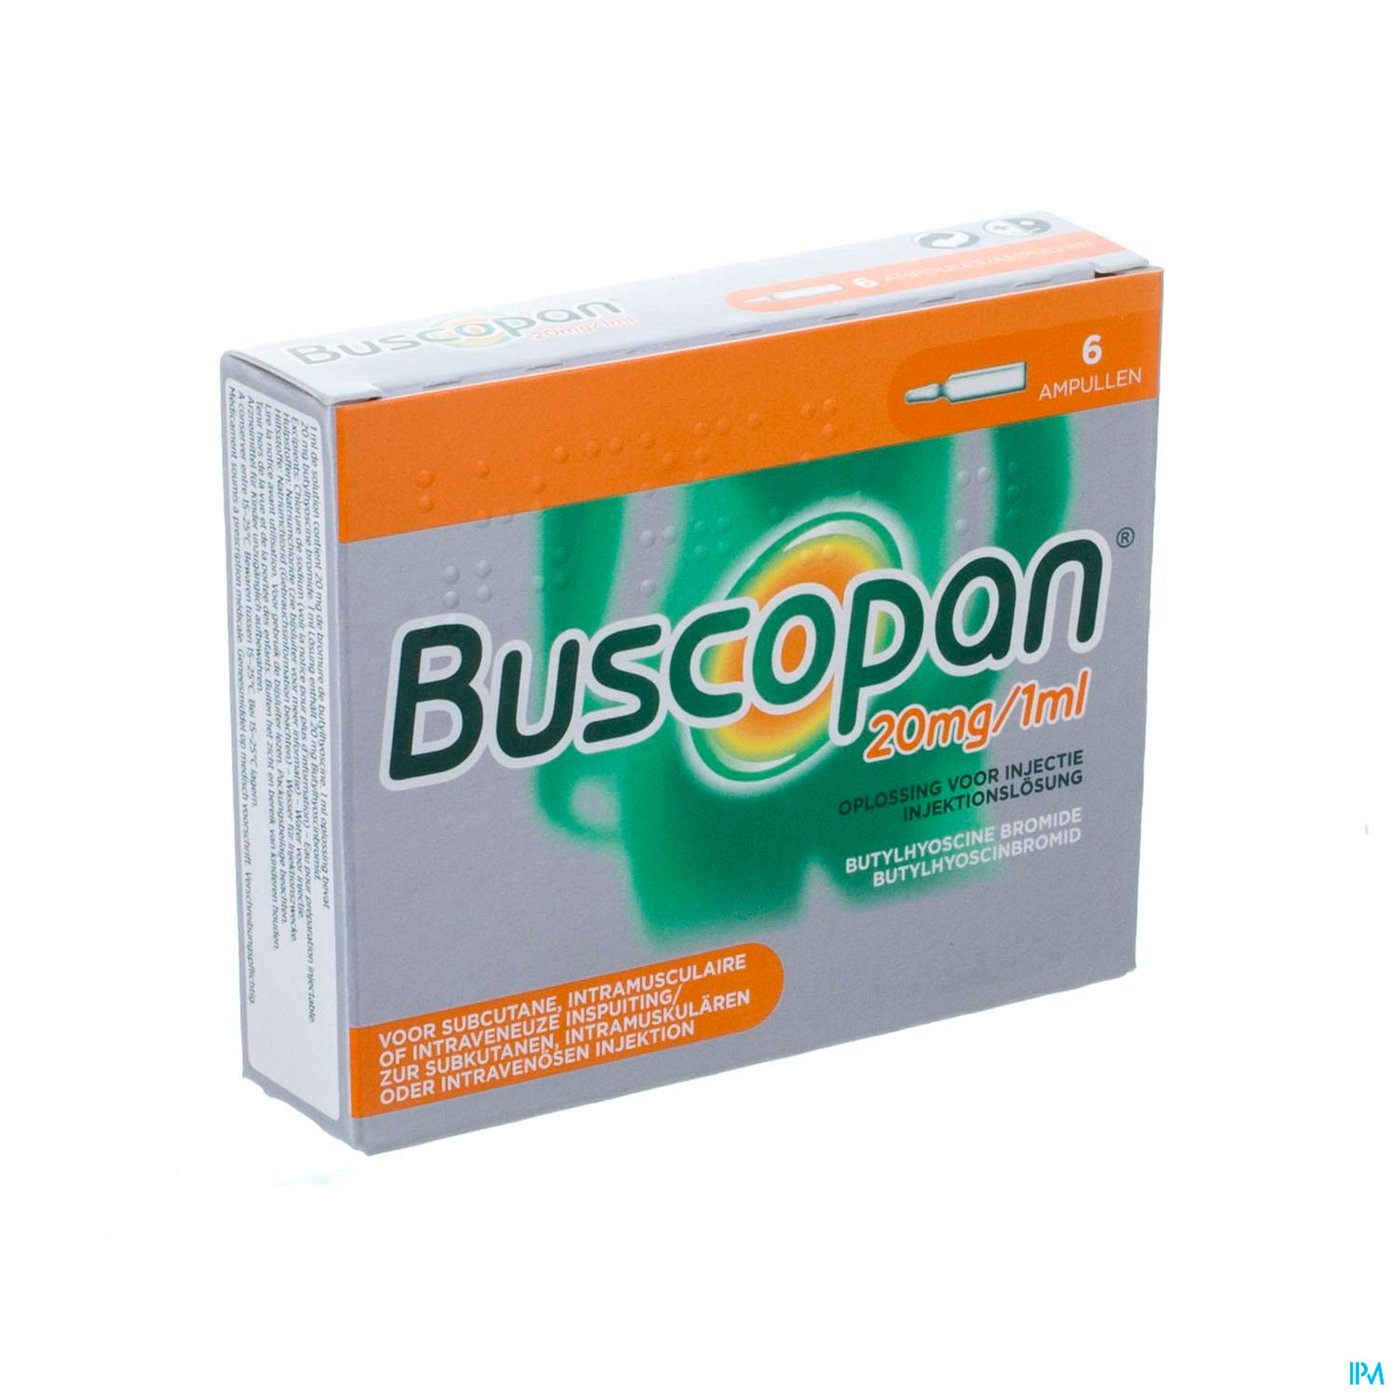 Buscopan Amp 6 X 20mg/1ml packshot